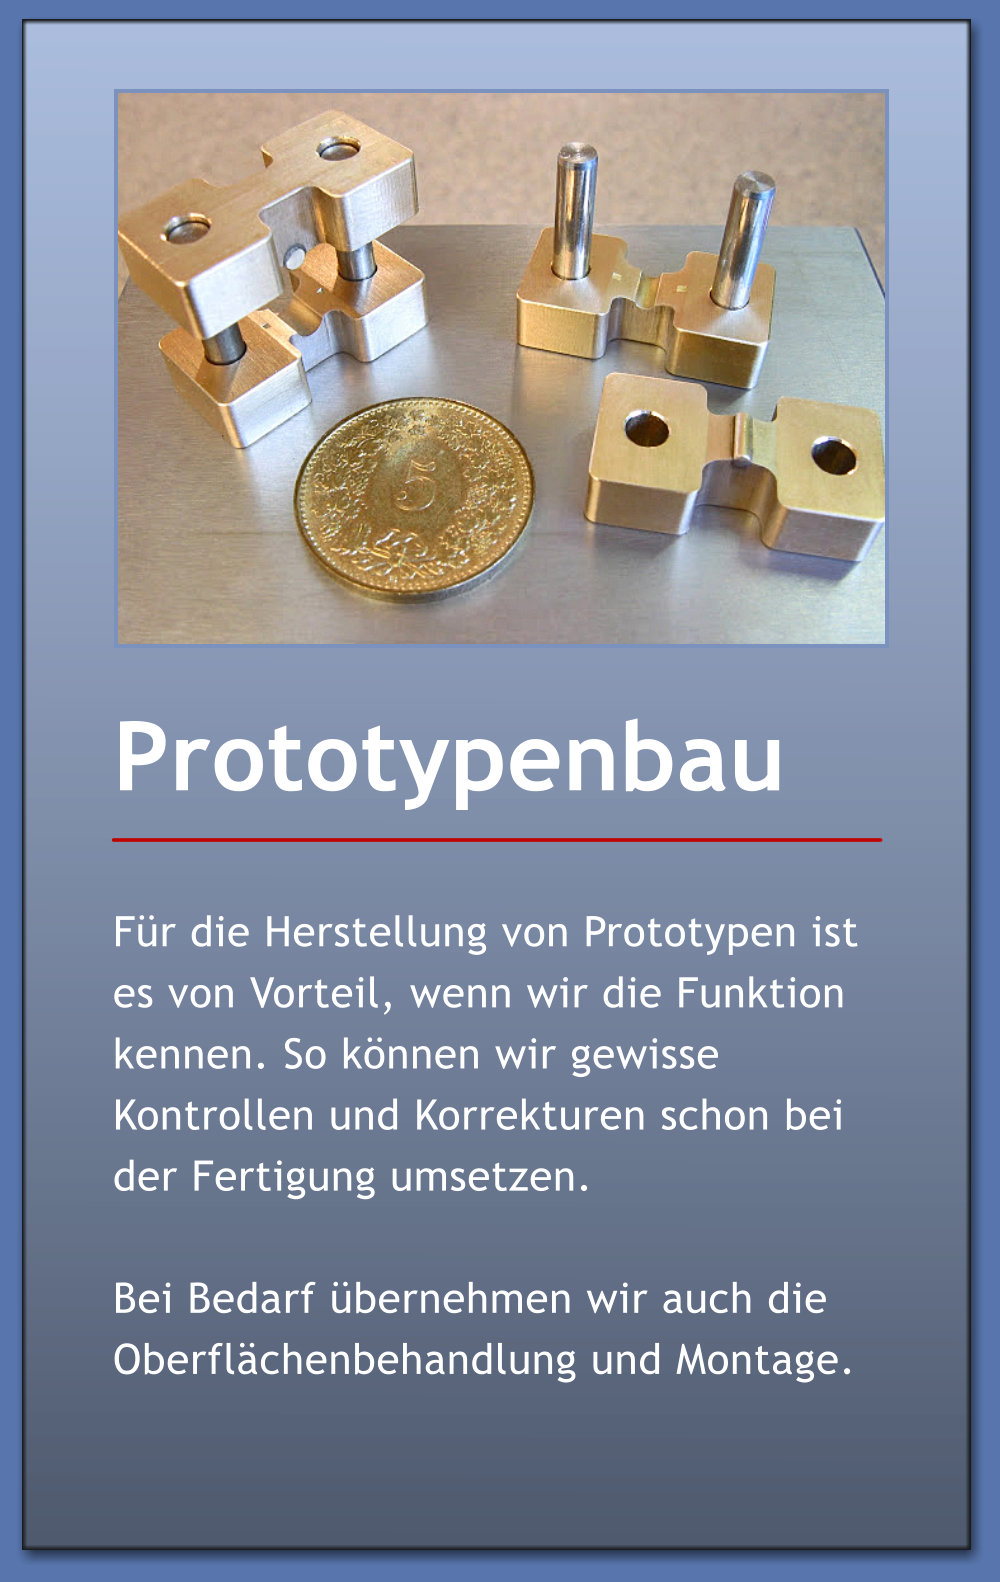 images/uebersicht/Prototypenbau.jpg